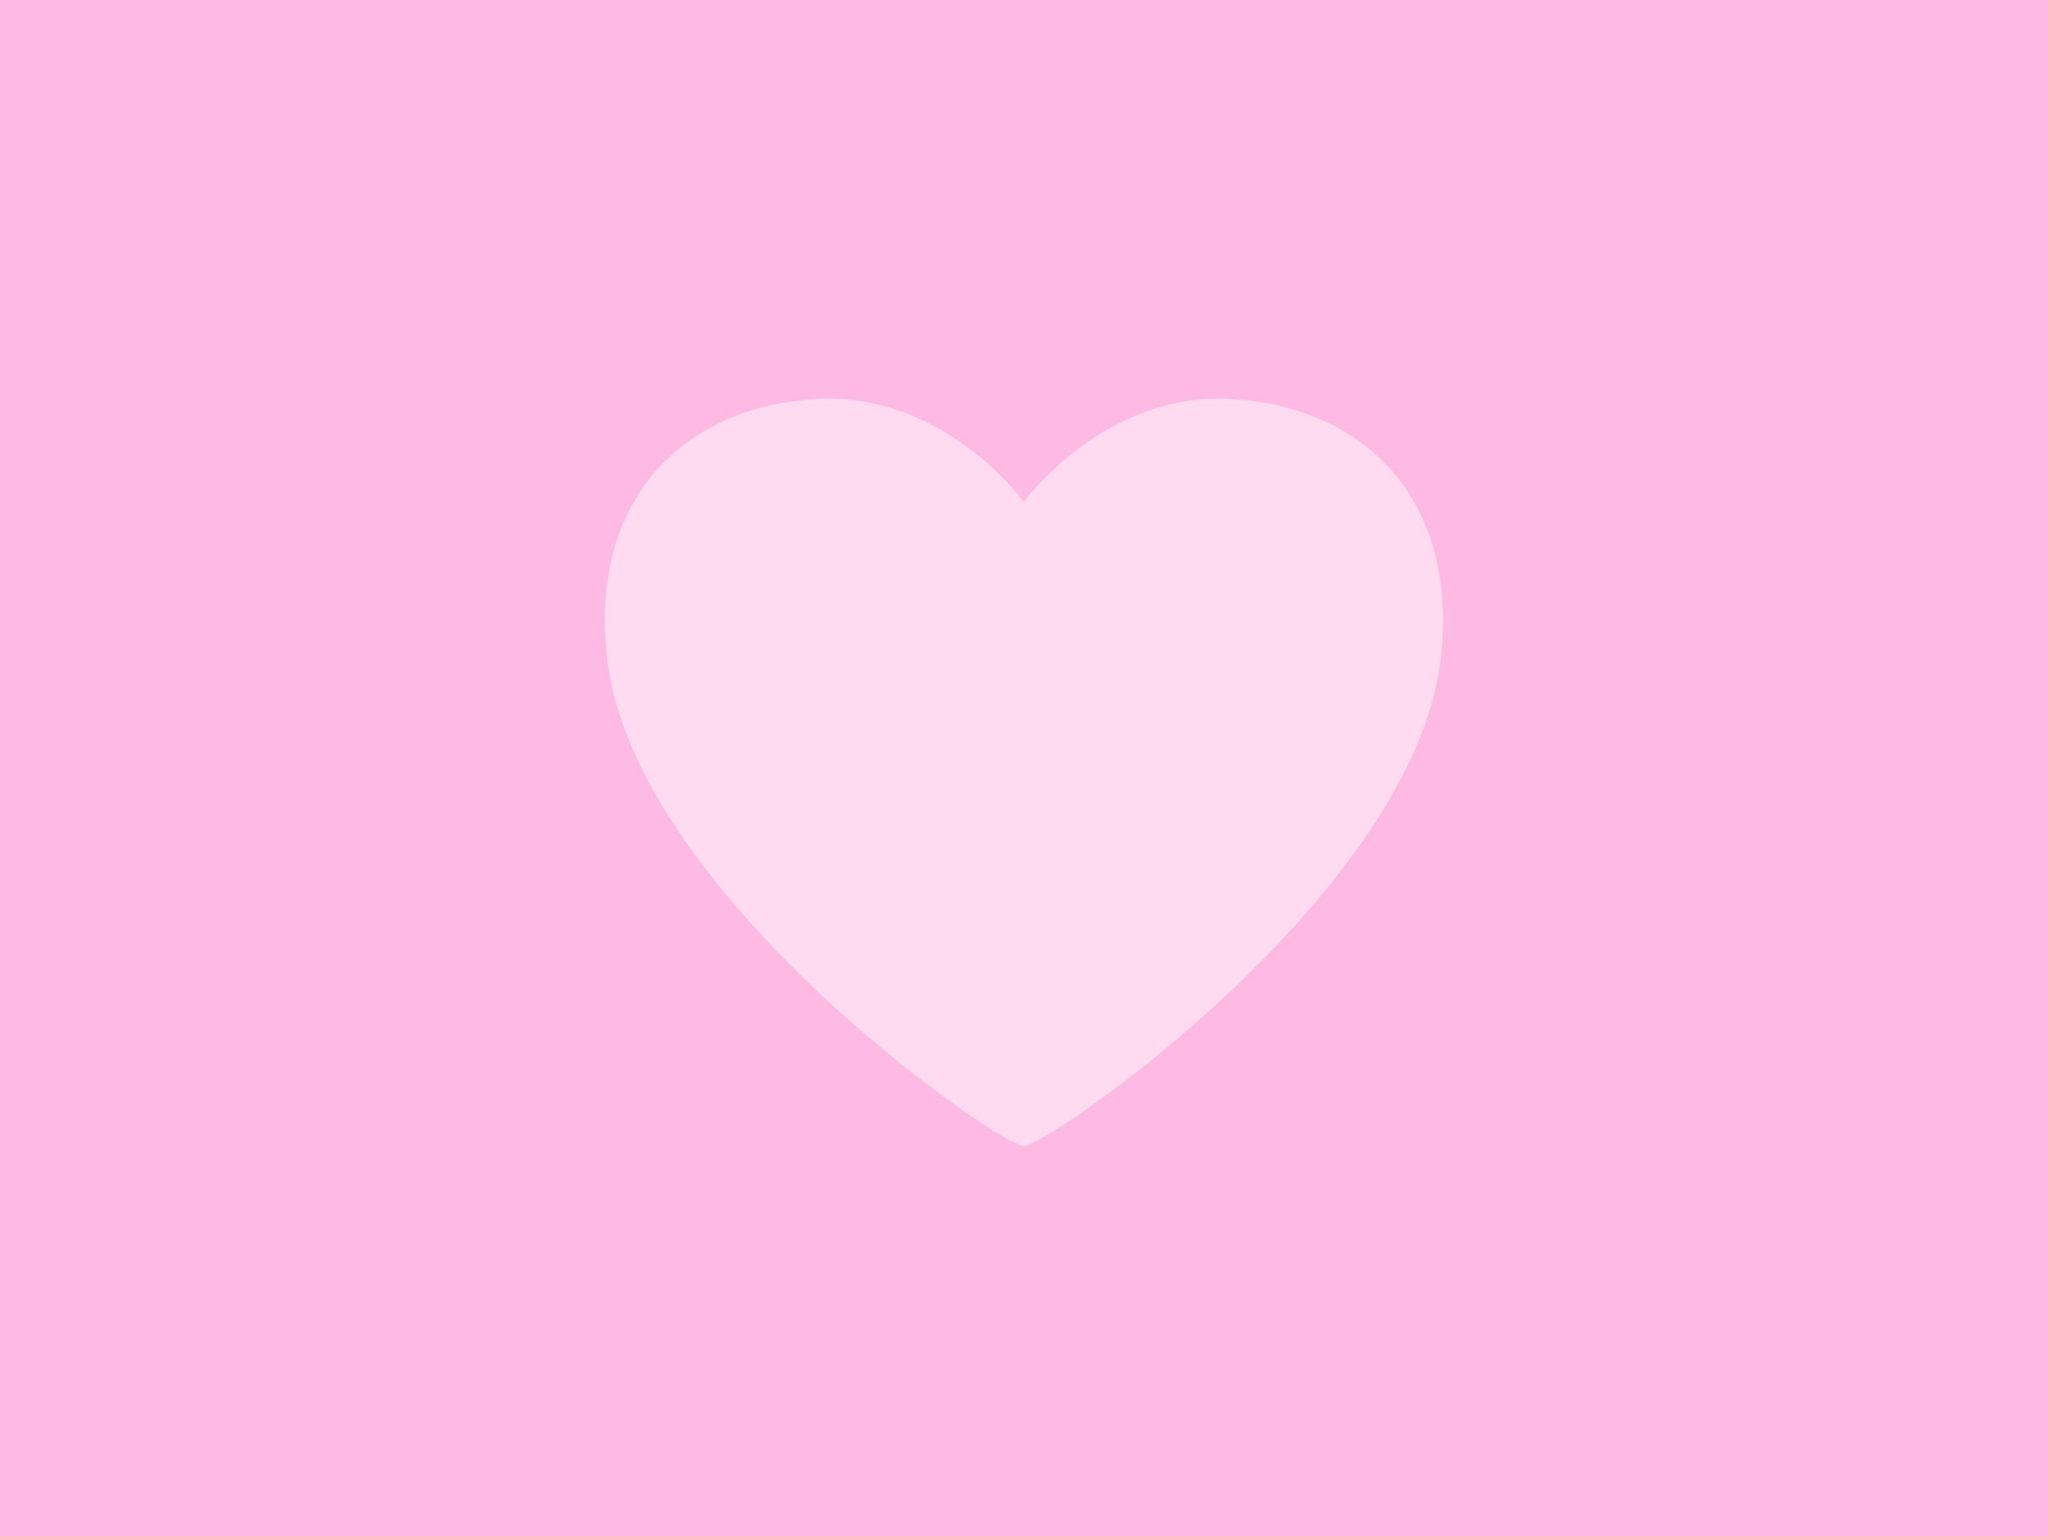 2048x1536 wallpaper Love Heart Pink Background iPad Wallpaper 2048x1536 pixels resolution